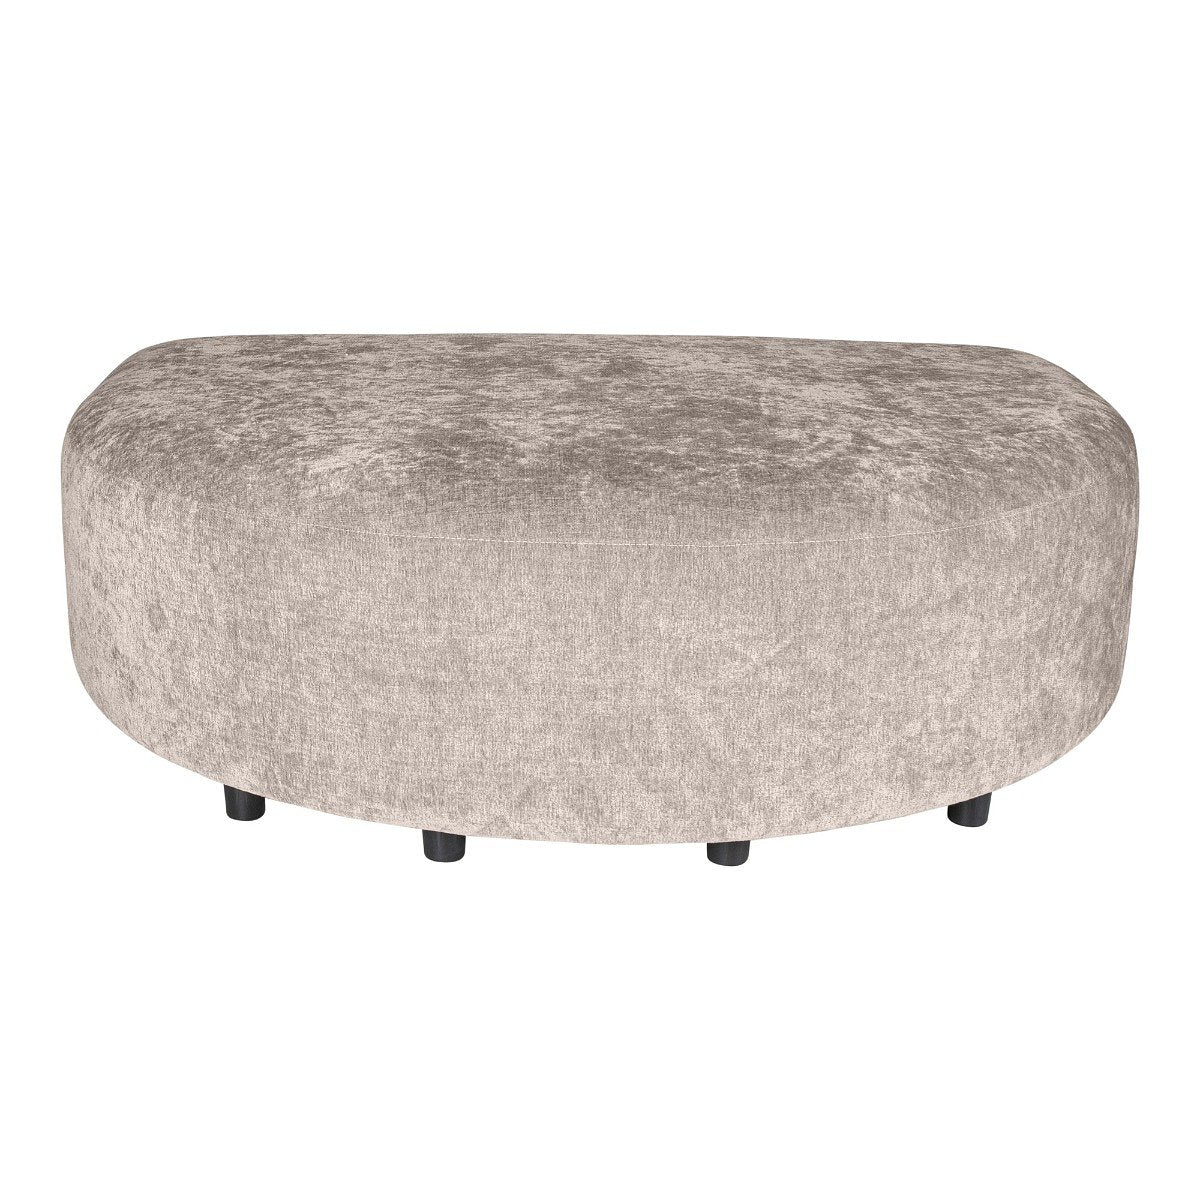 PTMD Lujo sofa white 9852 fiore fabric longchair pouf